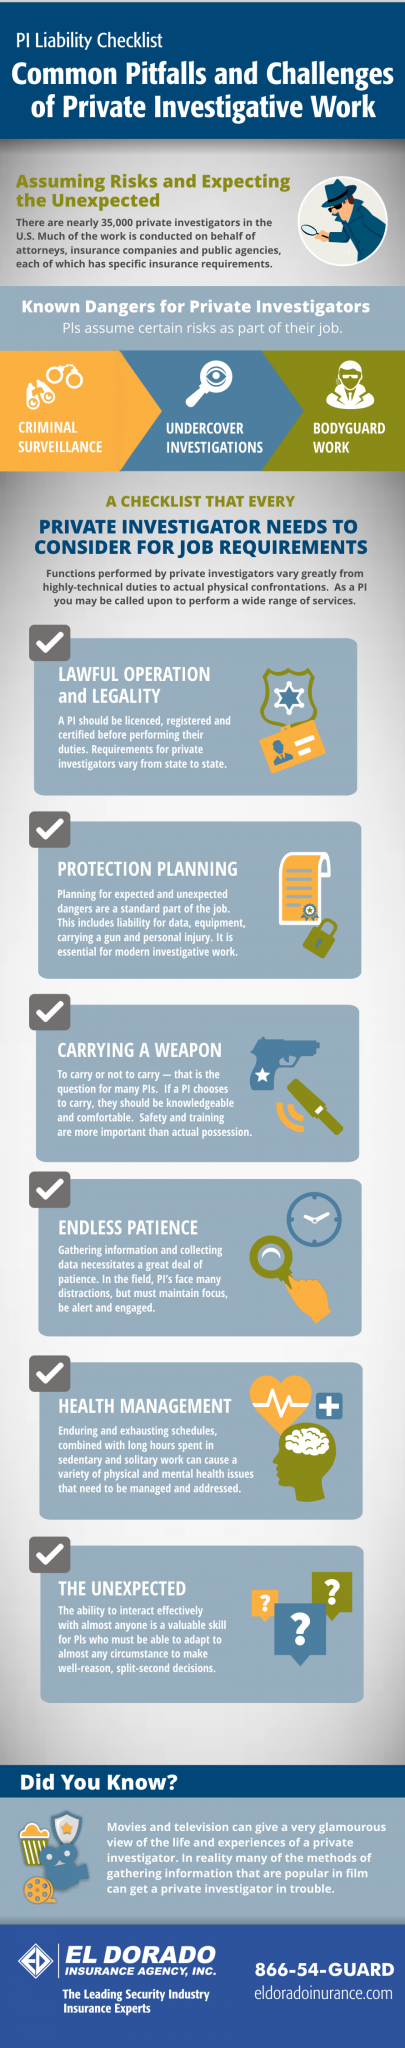 El_Dorado_Infographic_Liability_Checklist_new